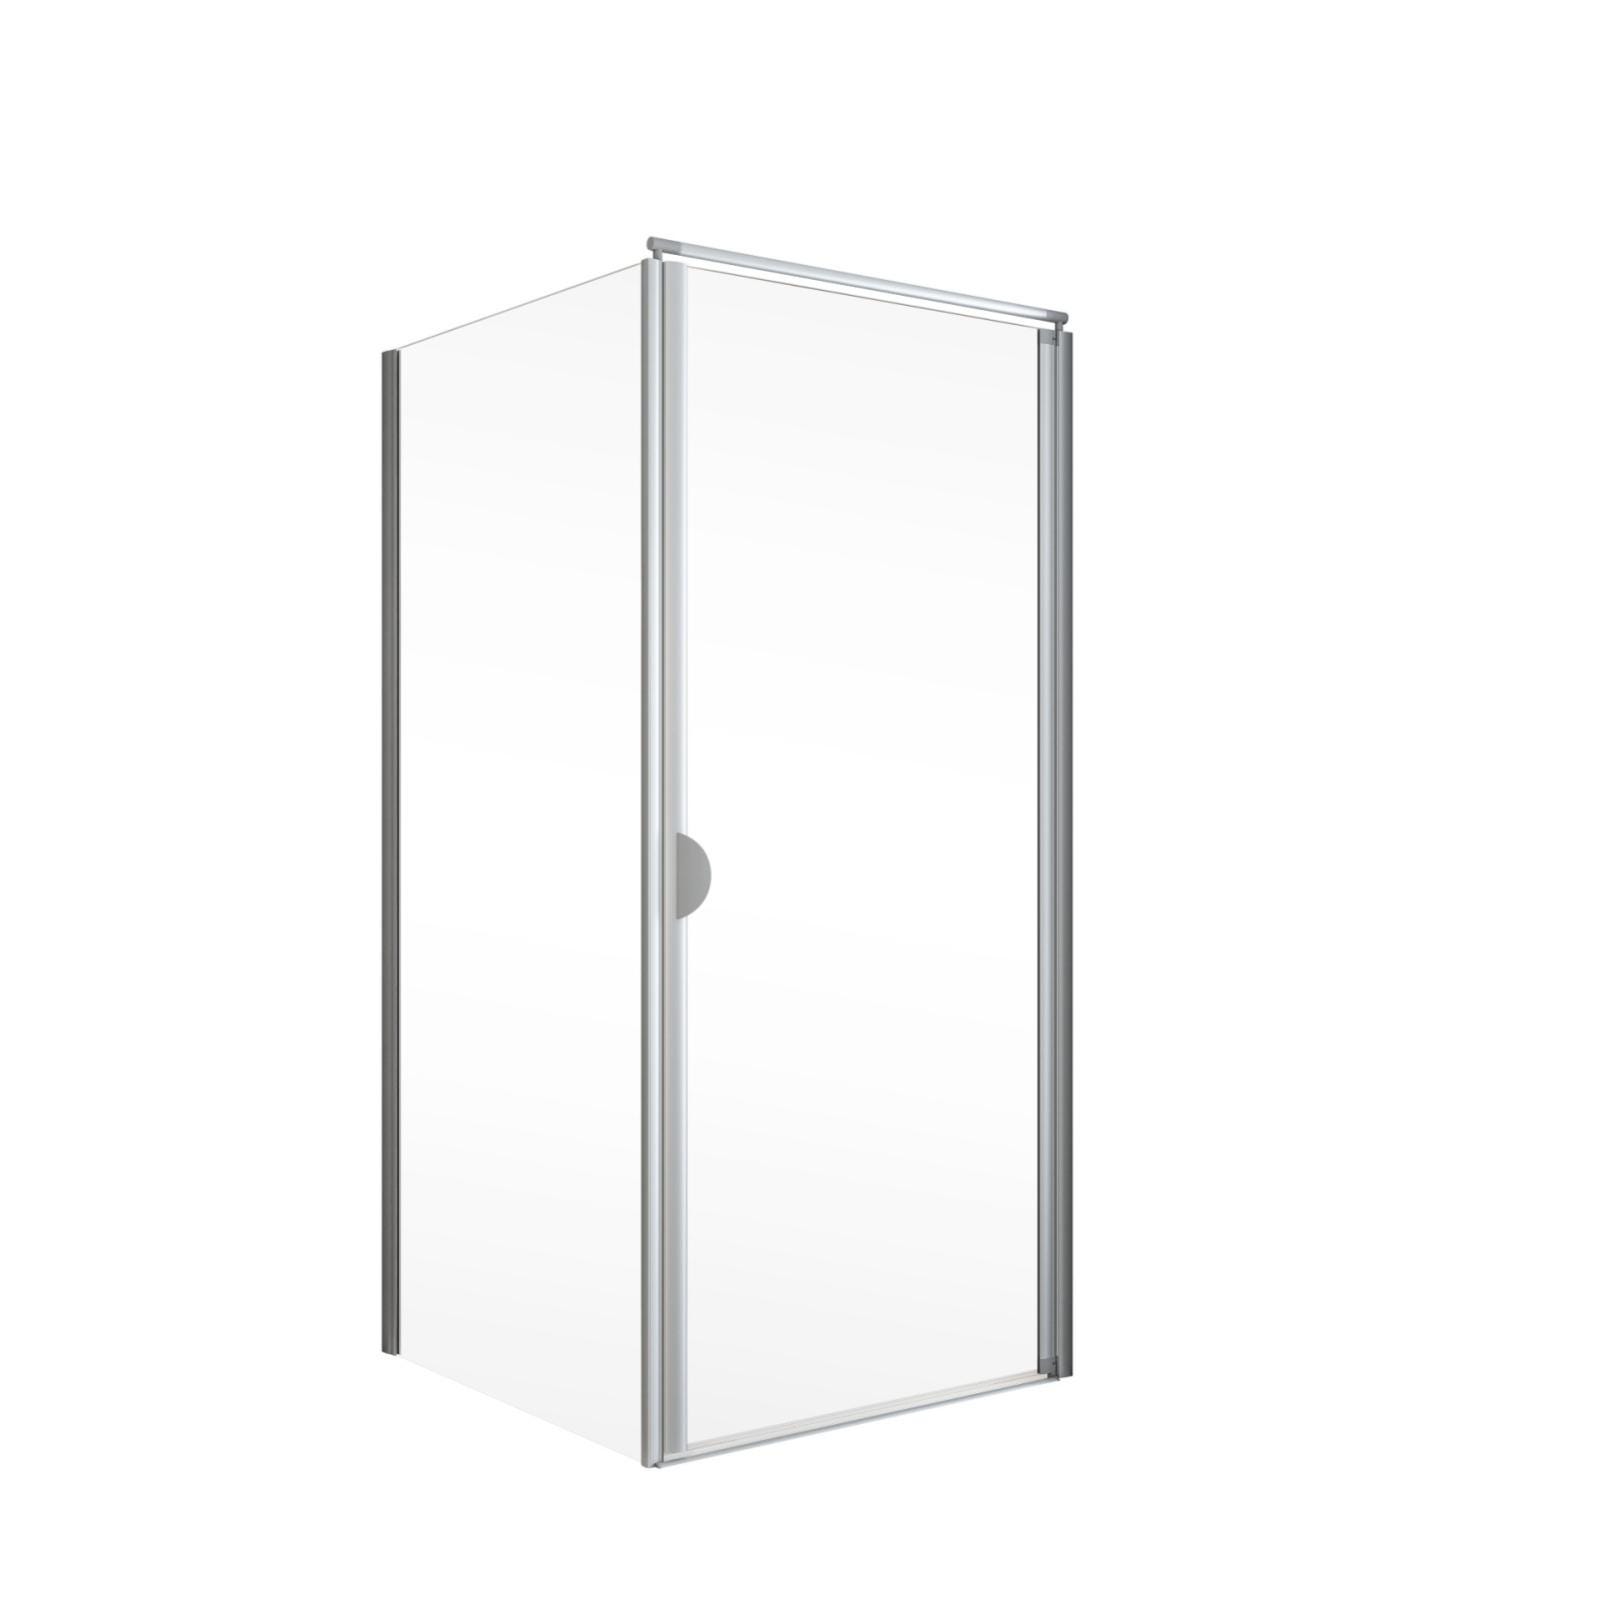 Schulte porte de douche pivotante + paroi de retour fixe, 90 x 90 x 180 cm, verre 5 mm transparent, profilé alu-nature, Sunny 2